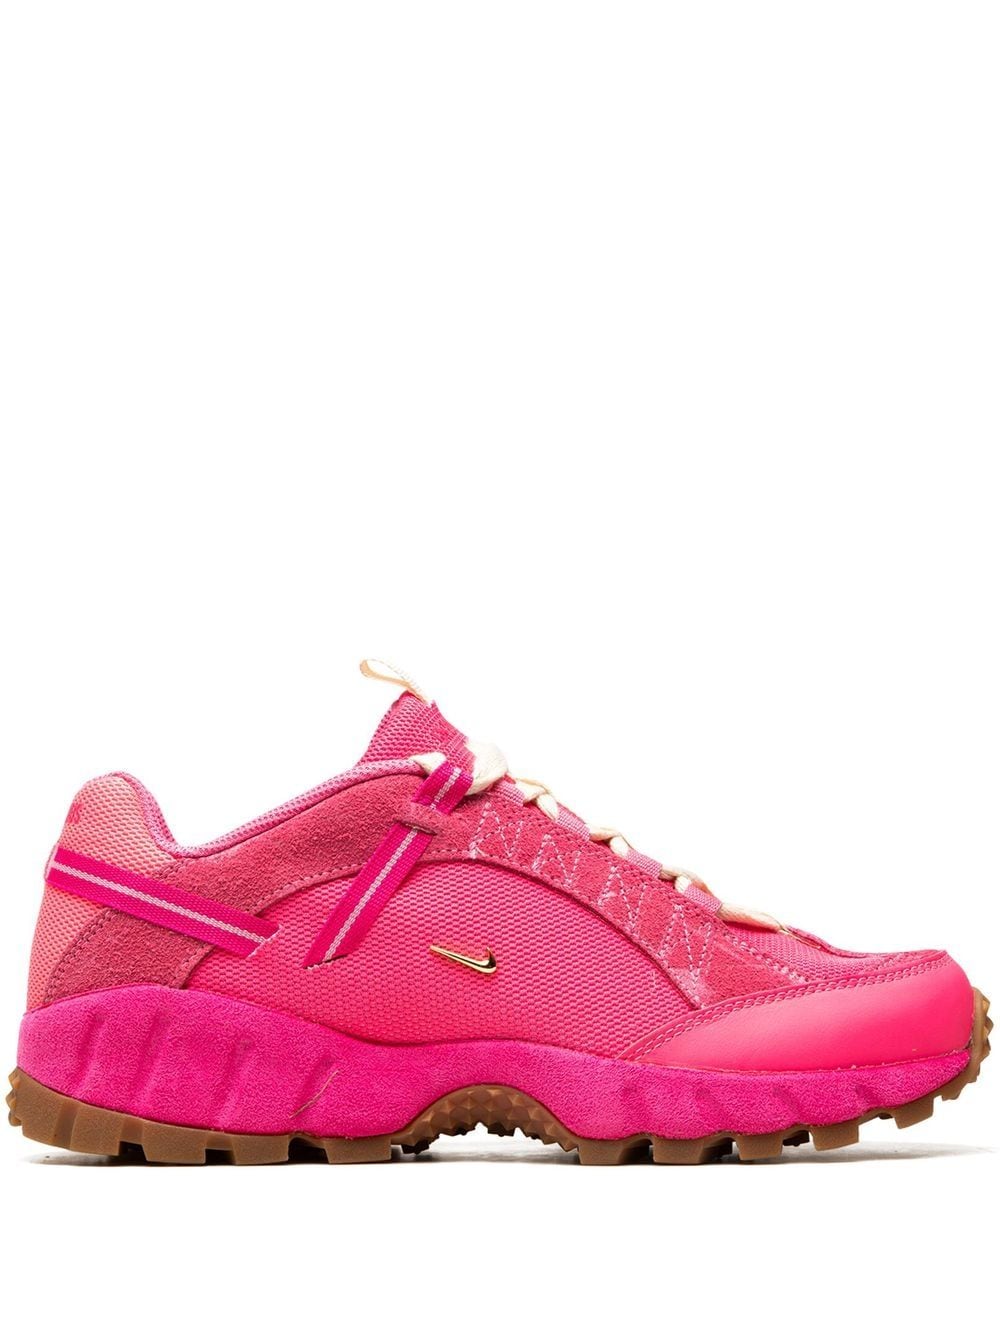 Nike x Jacquemus Air Humara LX "Pink" sneakers von Nike